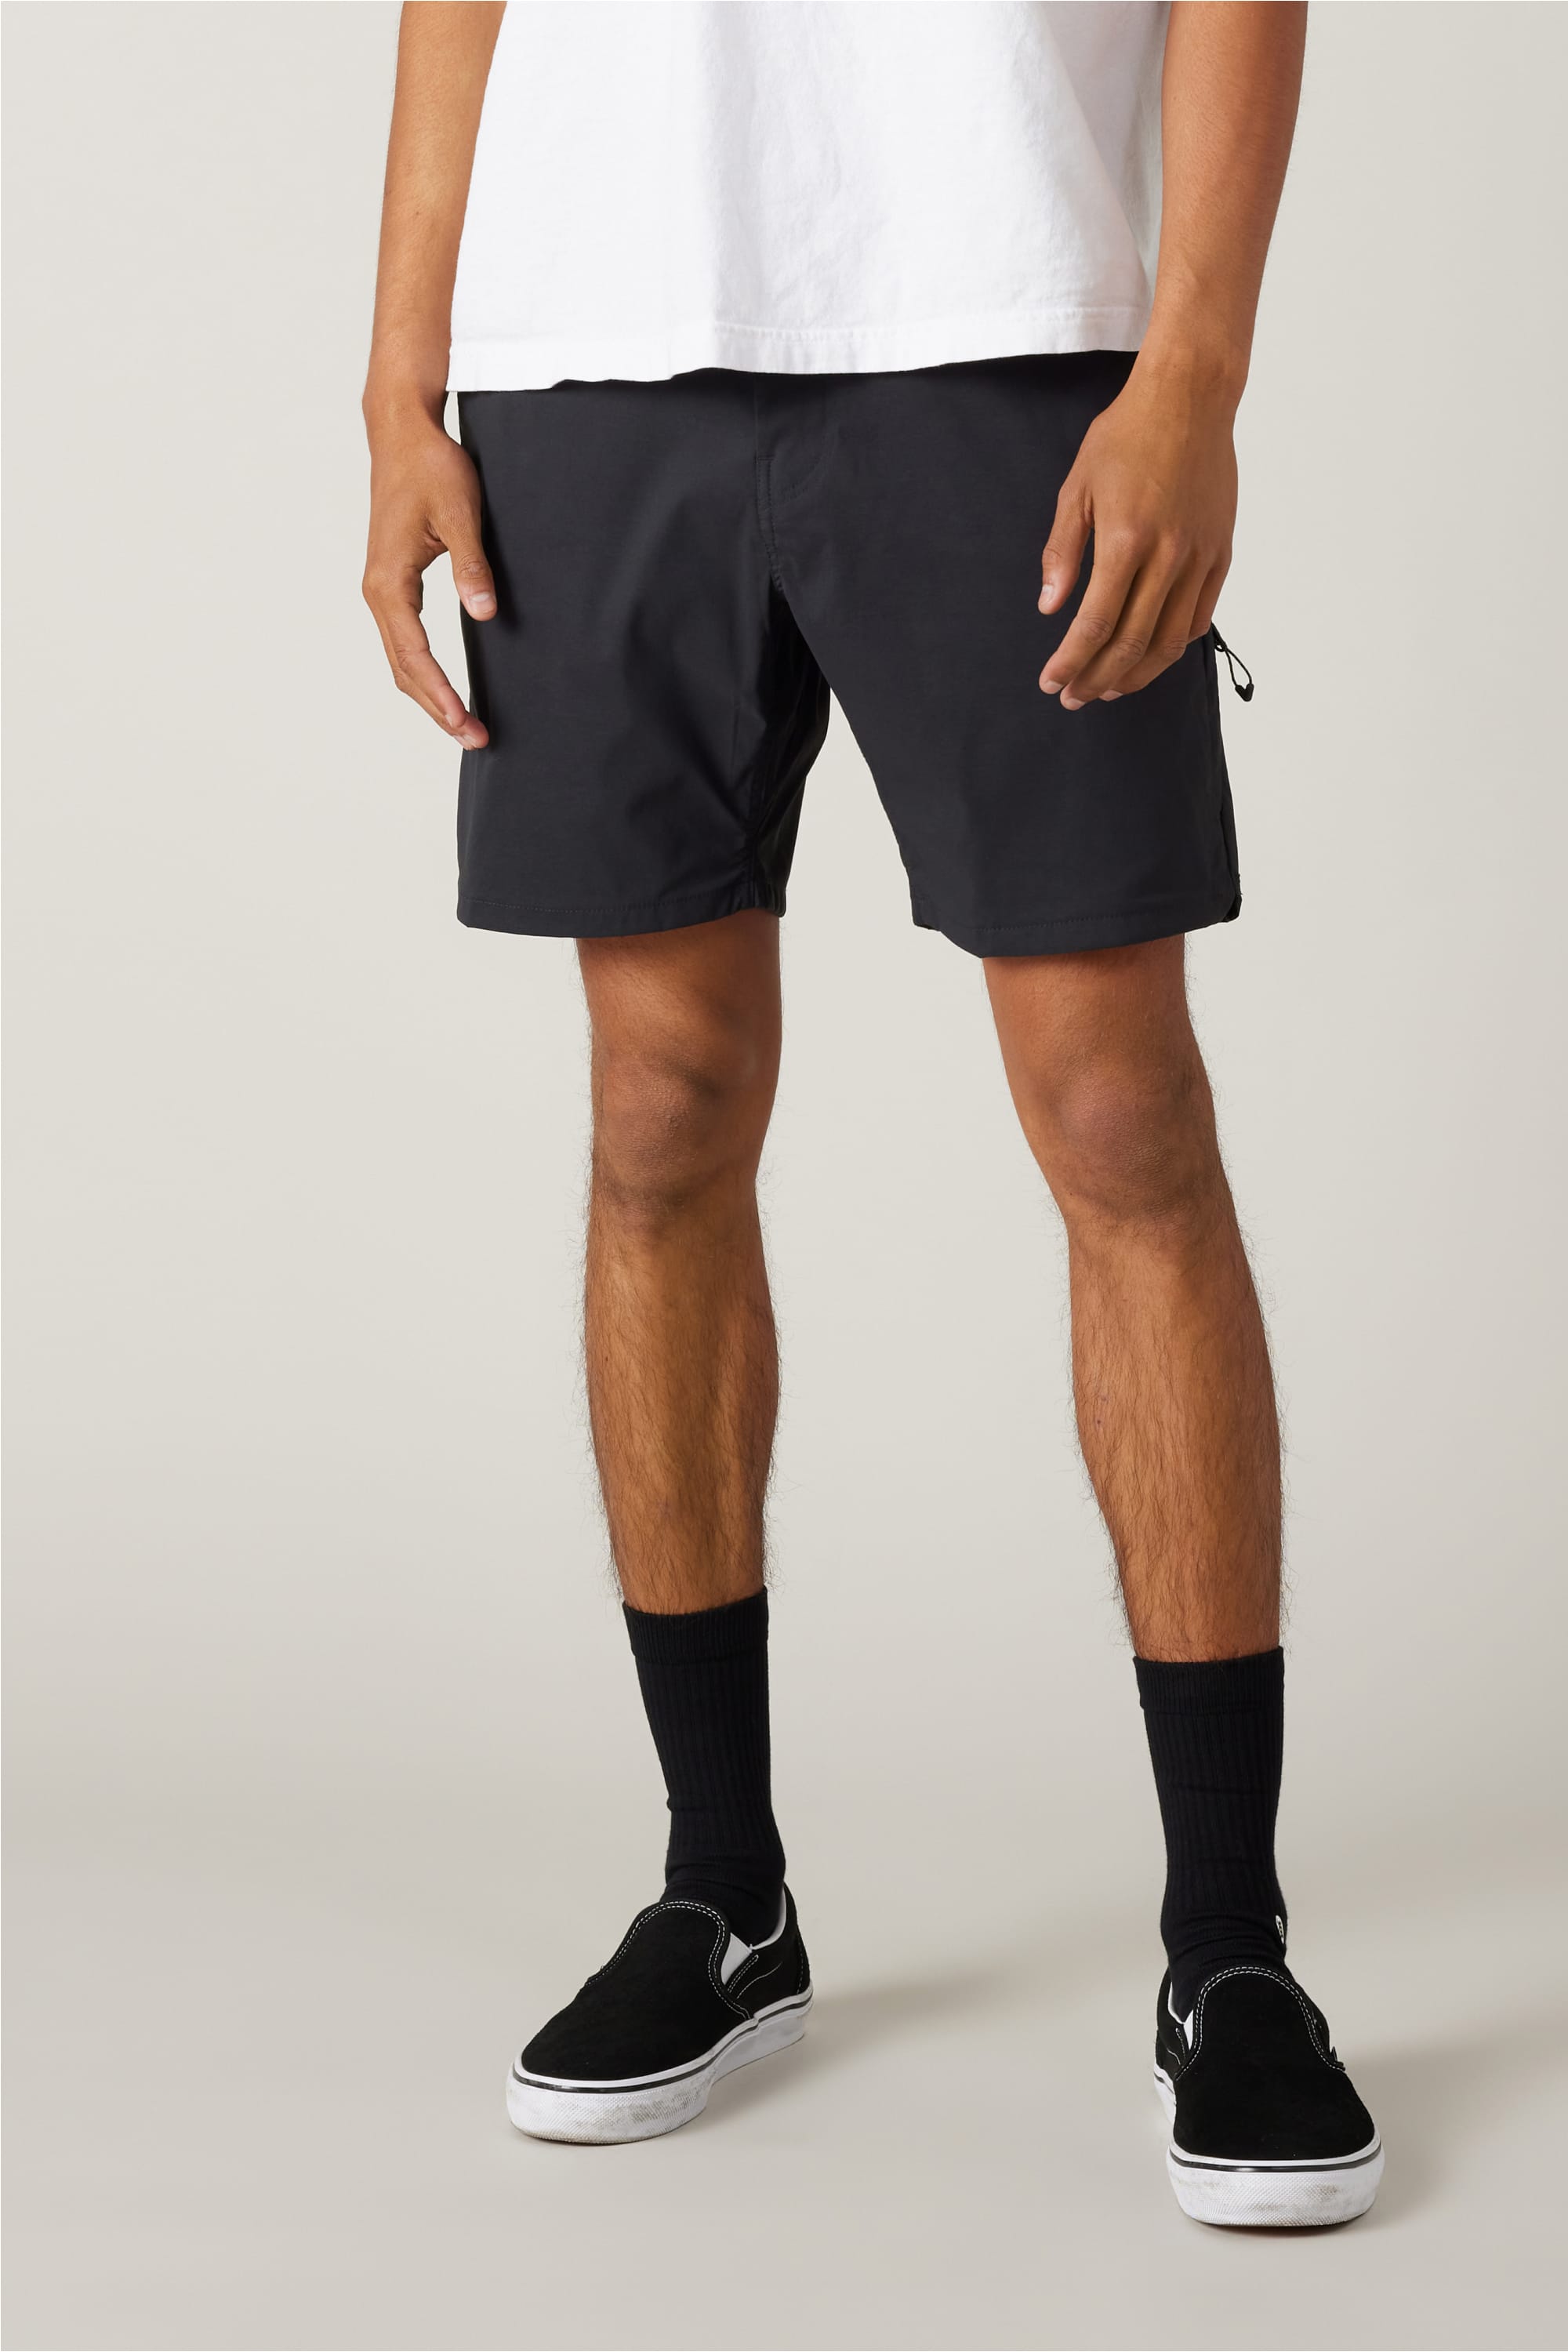 Men's Sports Shorts Summer Half Pant Classic-Fit Short Trousers